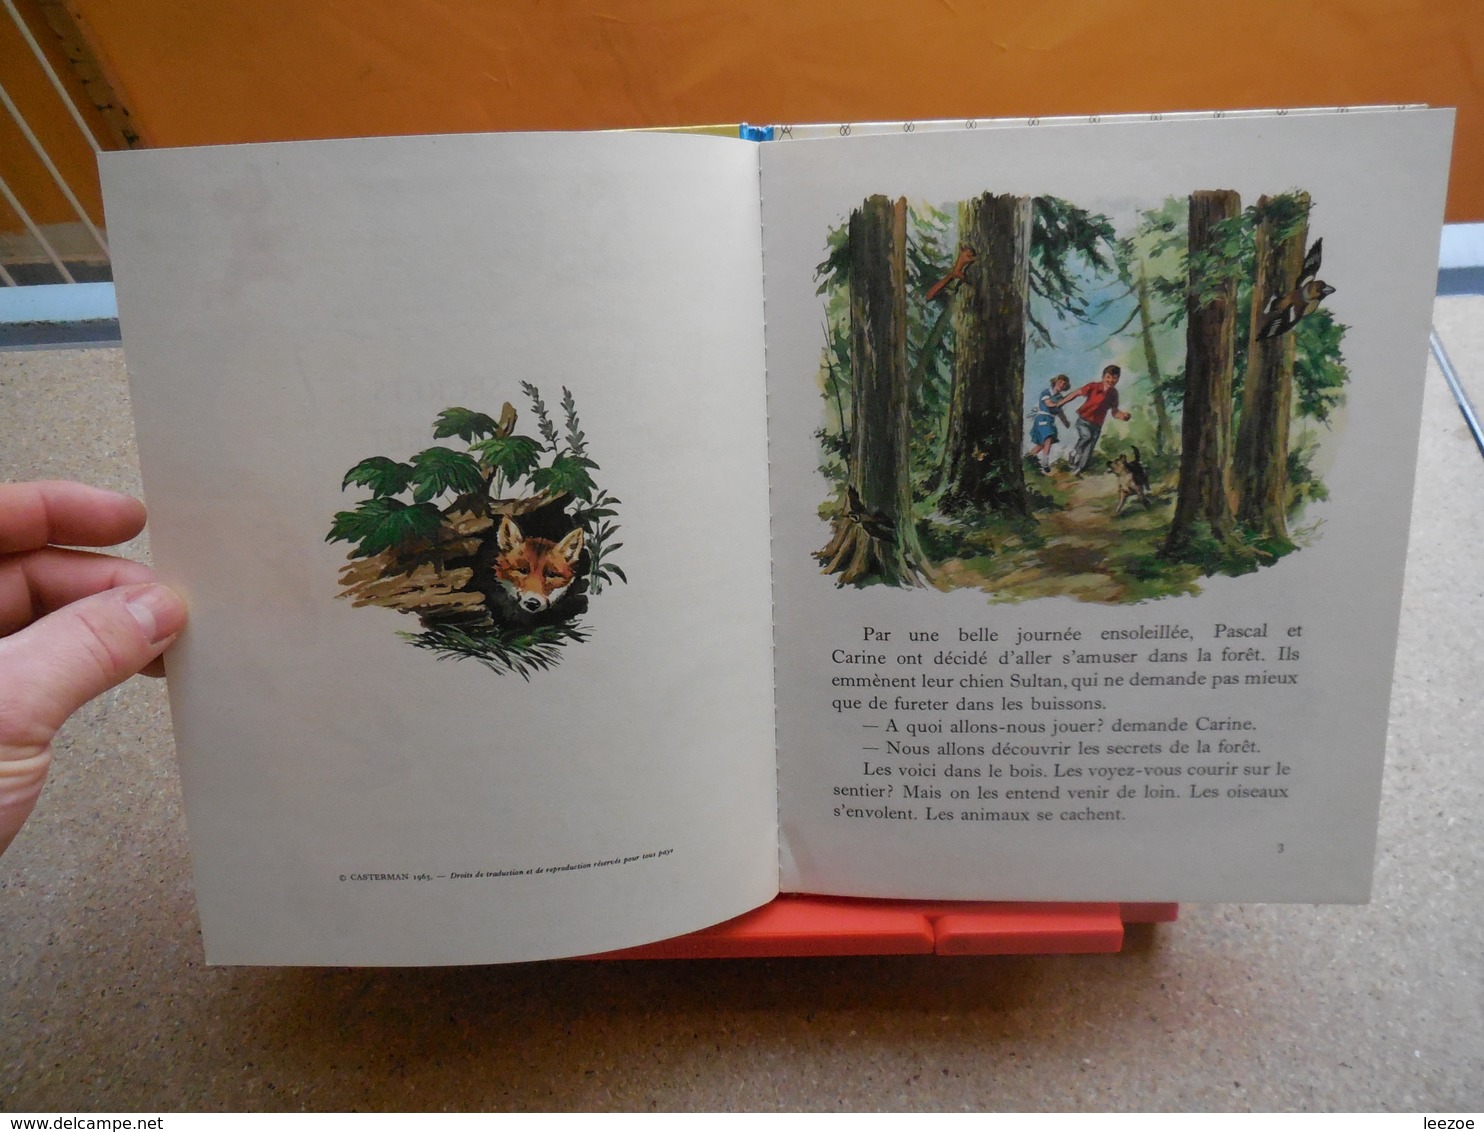 Collection Farandole Les Secrets De La Forêt. Gilbert Delahaye, Illustrations De Fred Et Liliane Funcken....3A0420 - Casterman